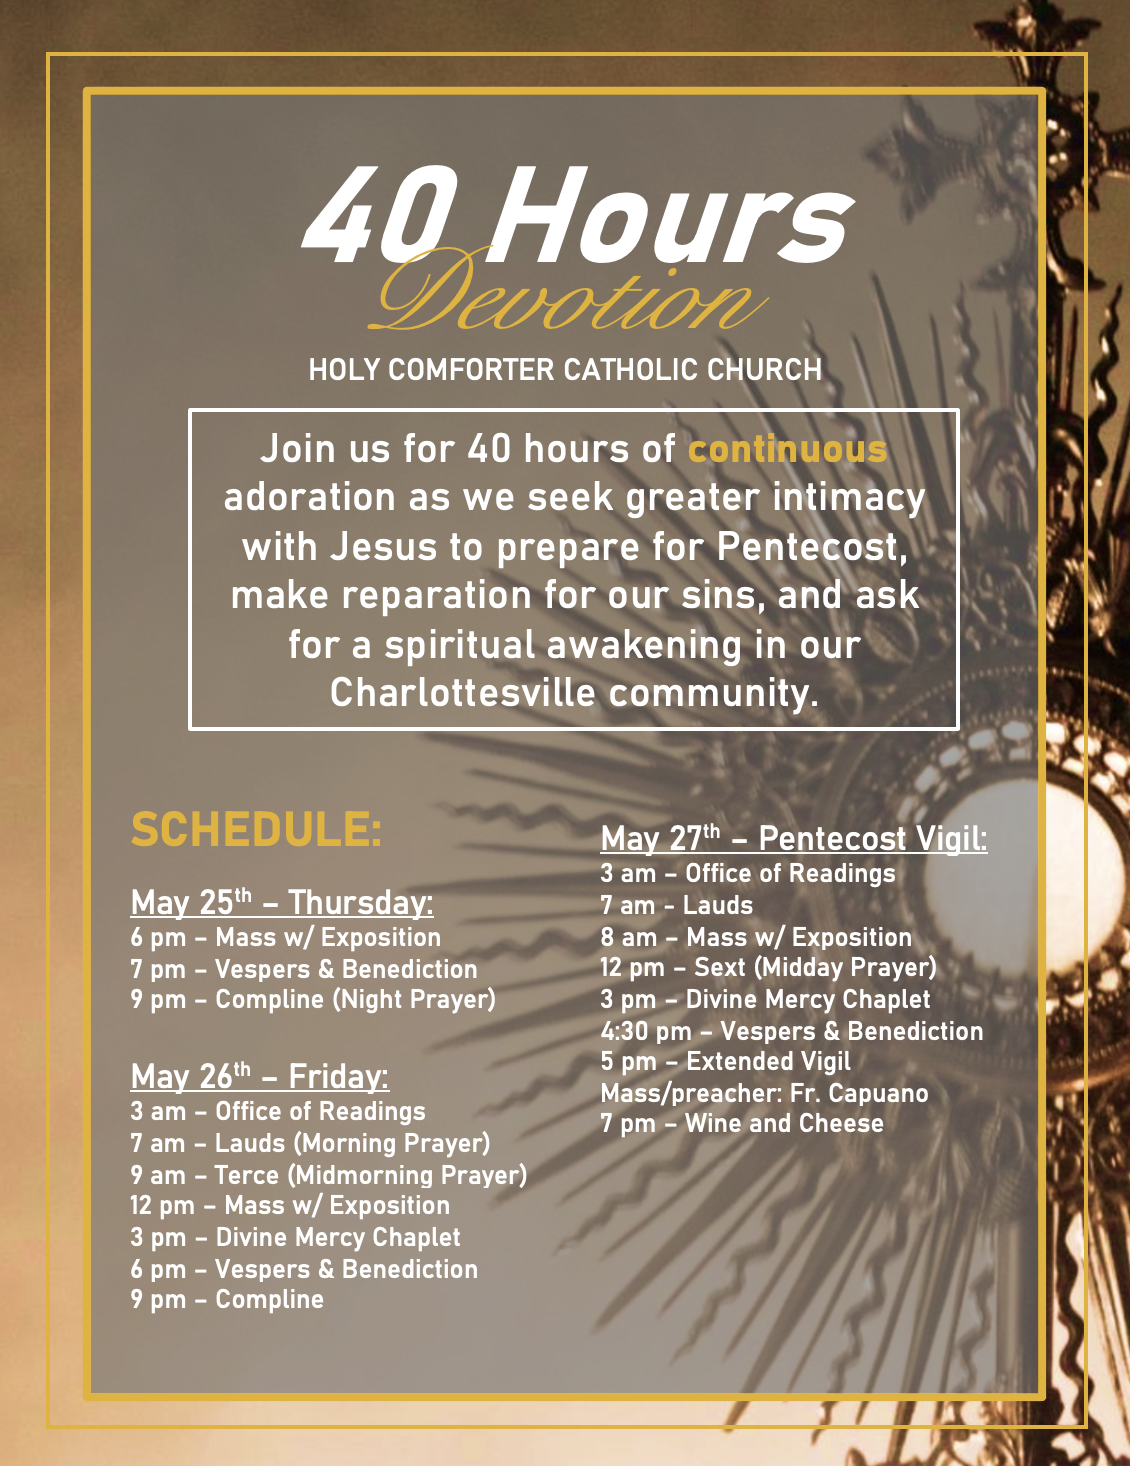 40 Hours Devotion in preparation for Pentecost